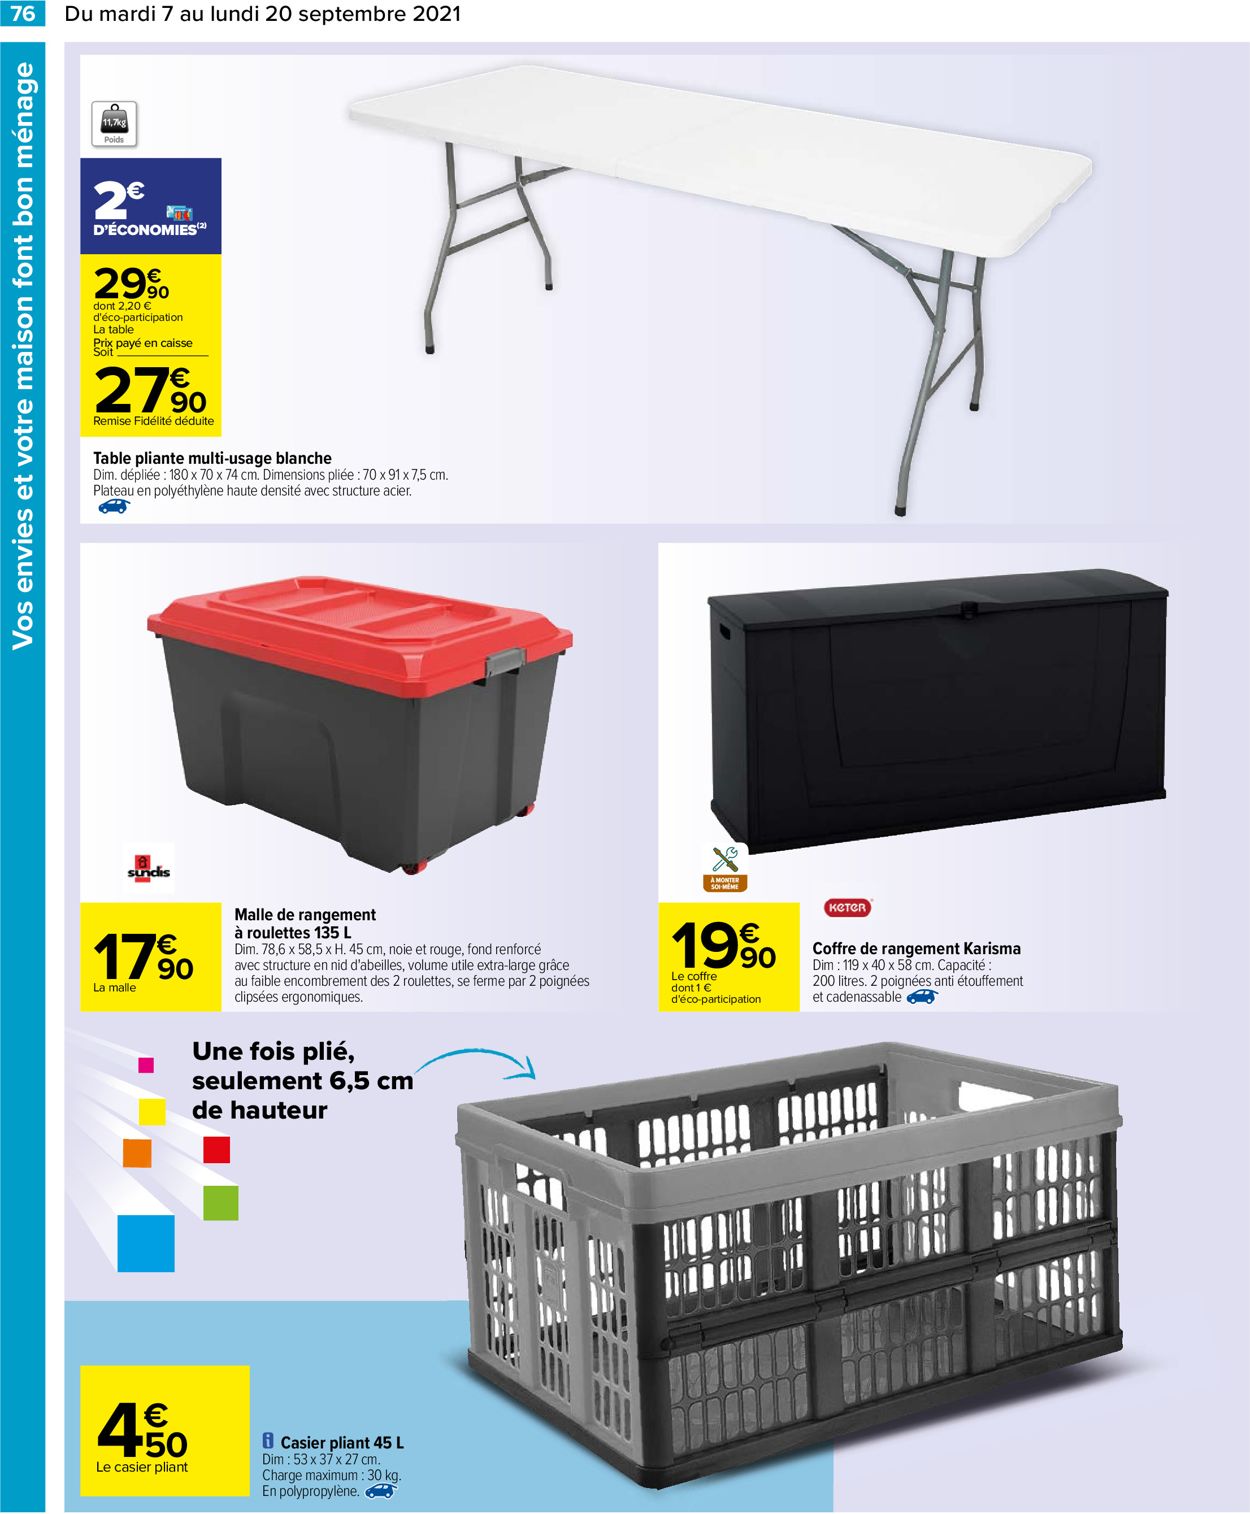 Carrefour Catalogue - 07.09-20.09.2021 (Page 76)